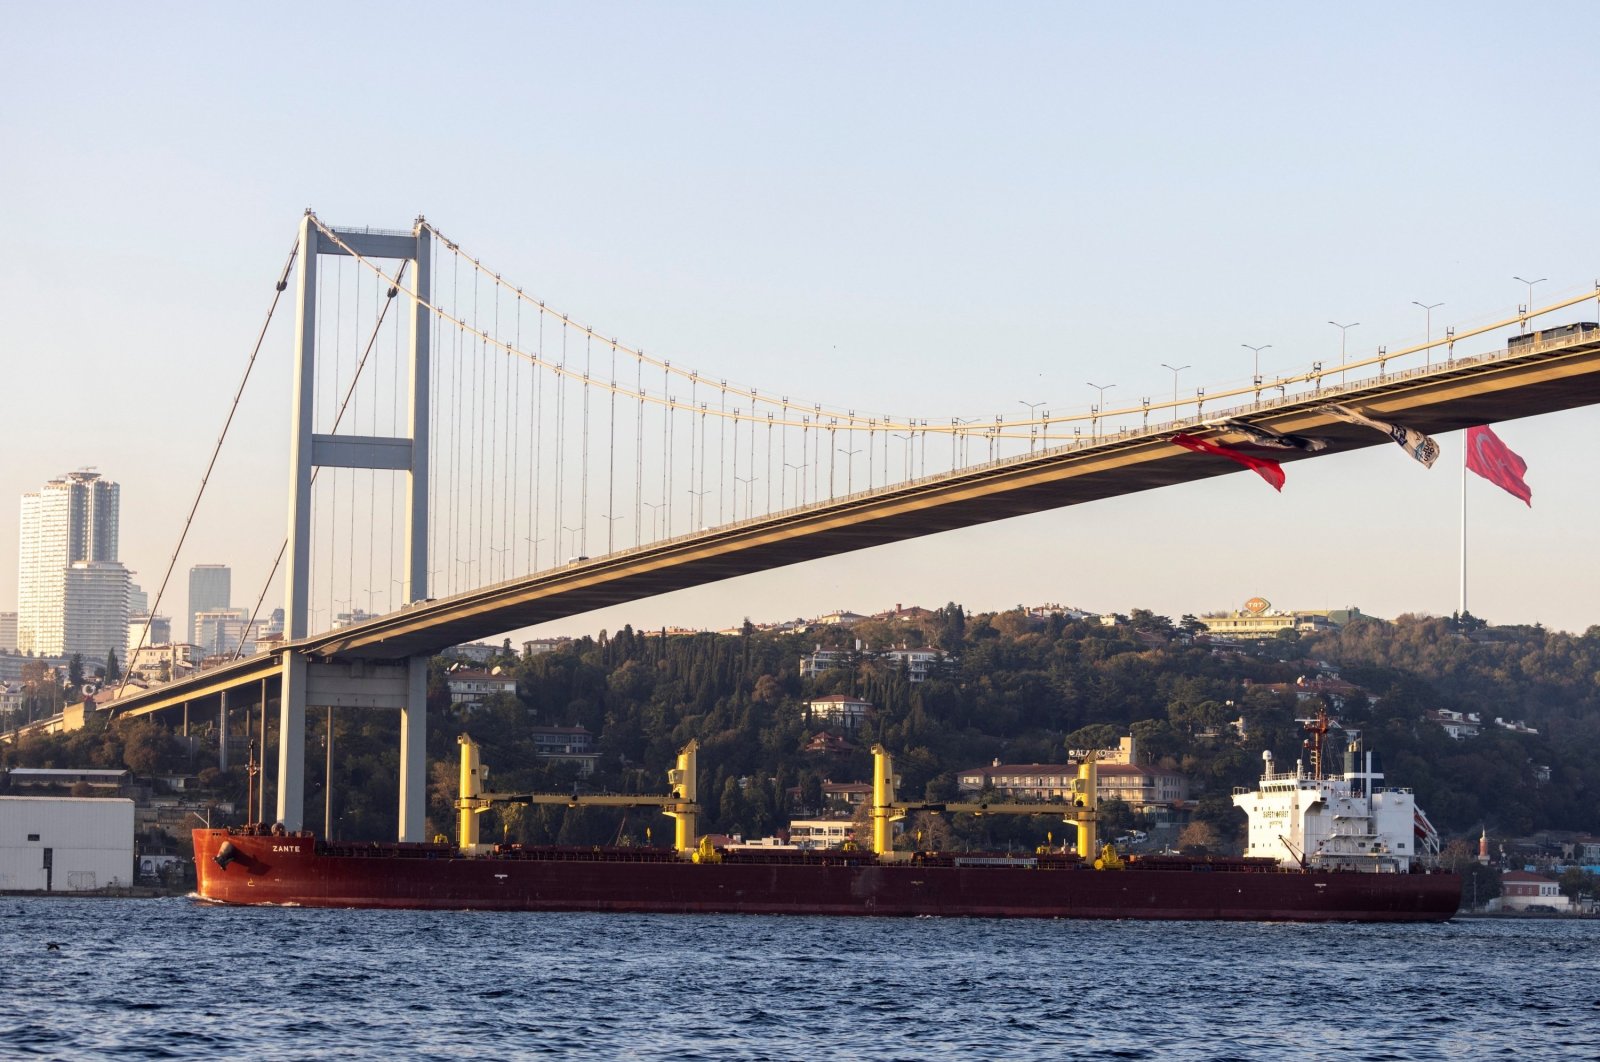 Measures taken to protect Istanbul ahead of expected Marmara quake